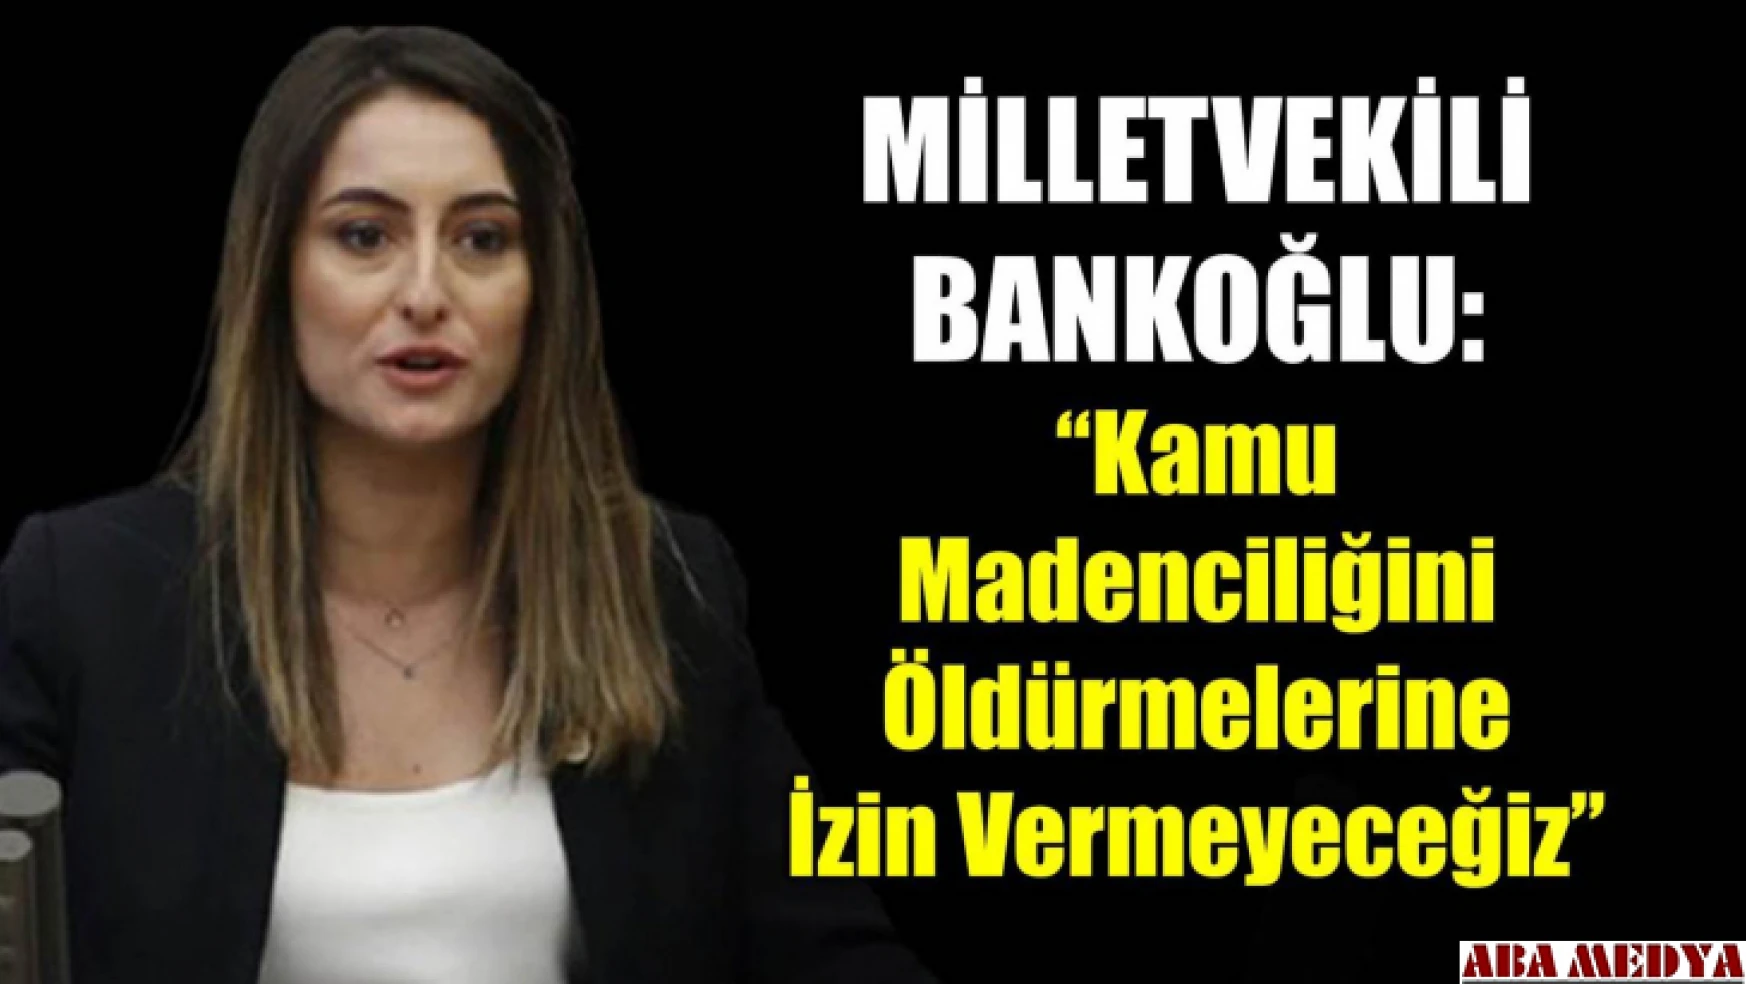 Milletvekili Bankoğlu HATTAT raporuna vurgu yaptı